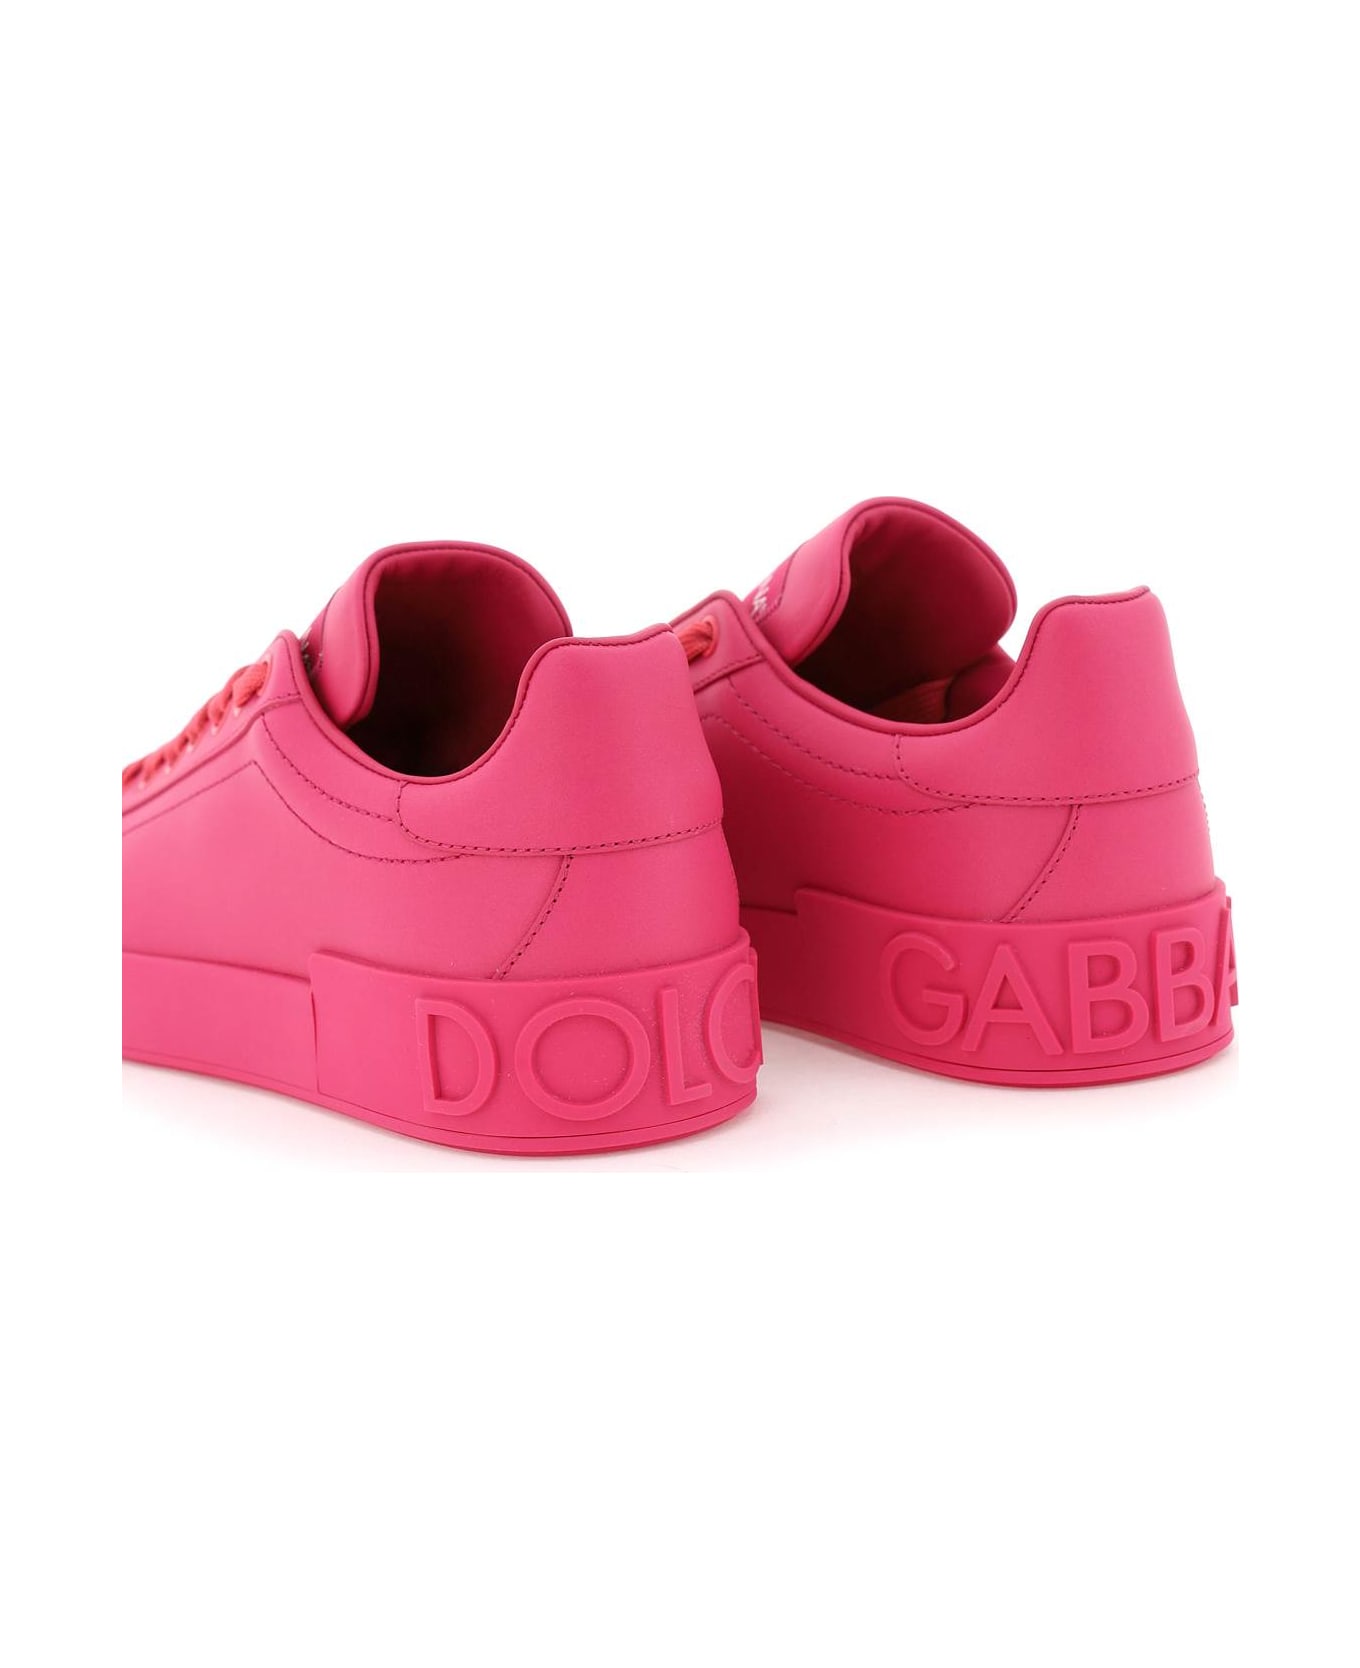 Dolce & Gabbana Portofino Sneakers - PINK